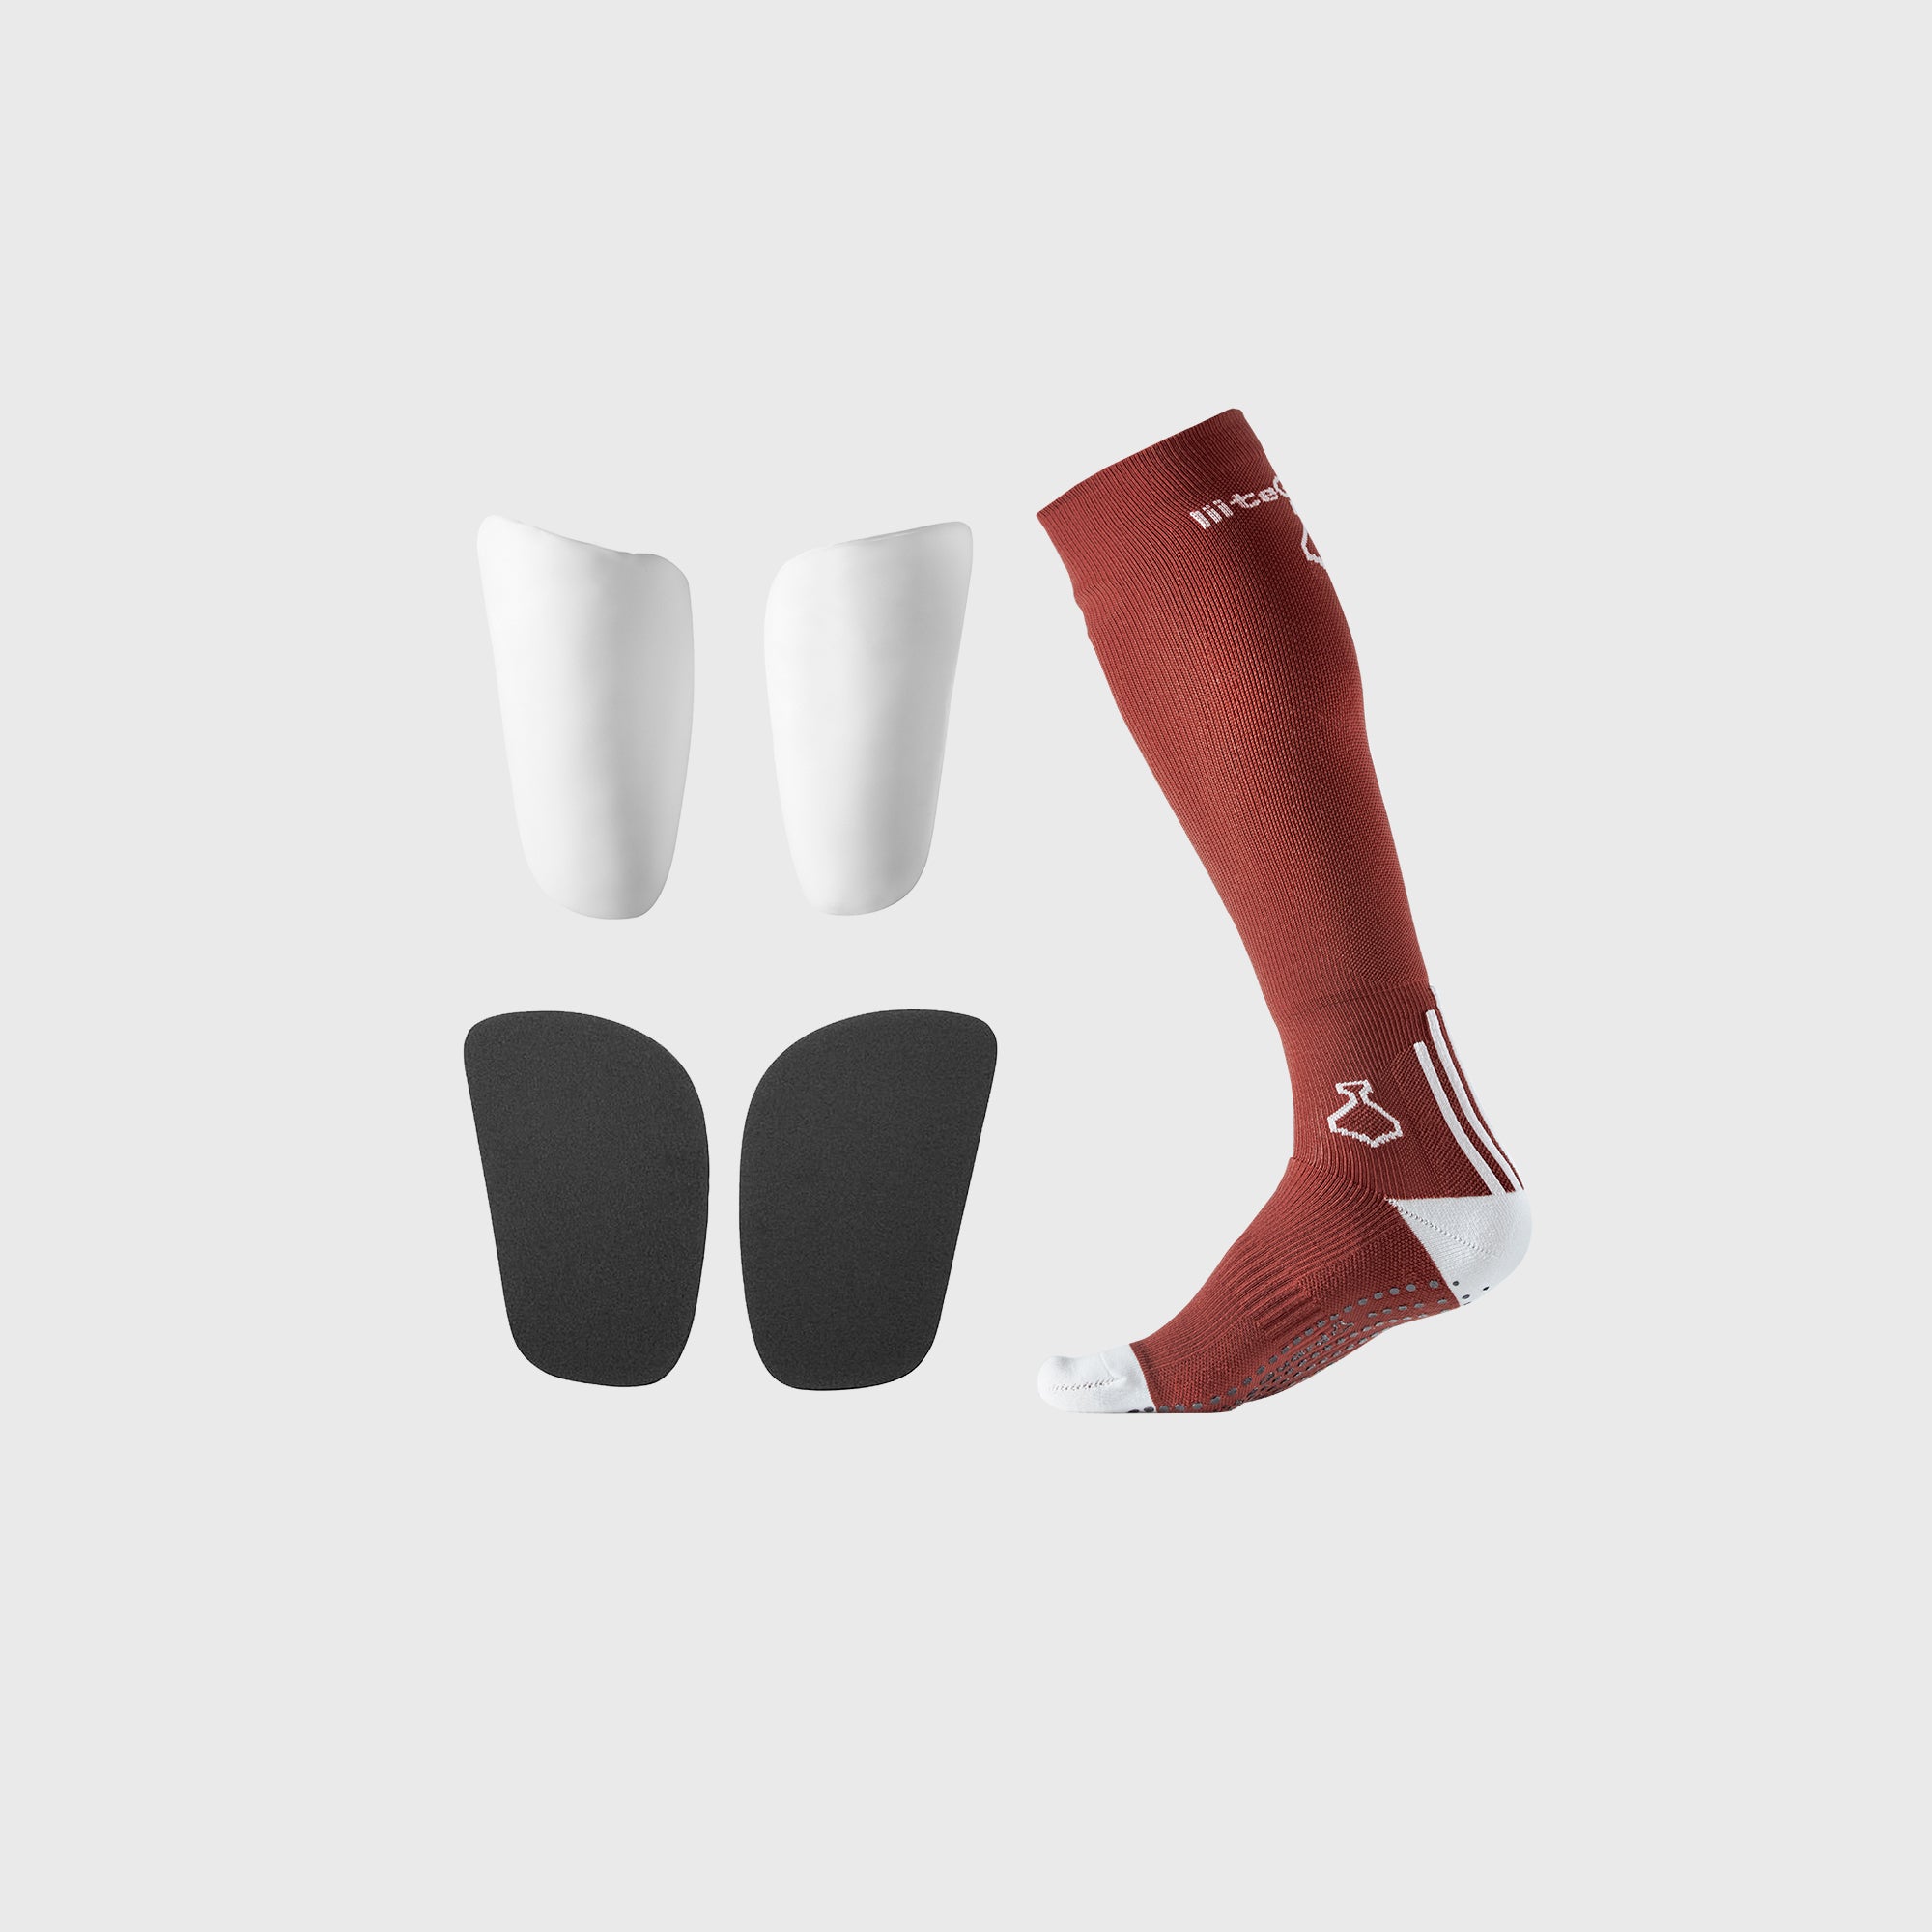 Liiteguard PERFORMANCE KIT Long socks DARK RED